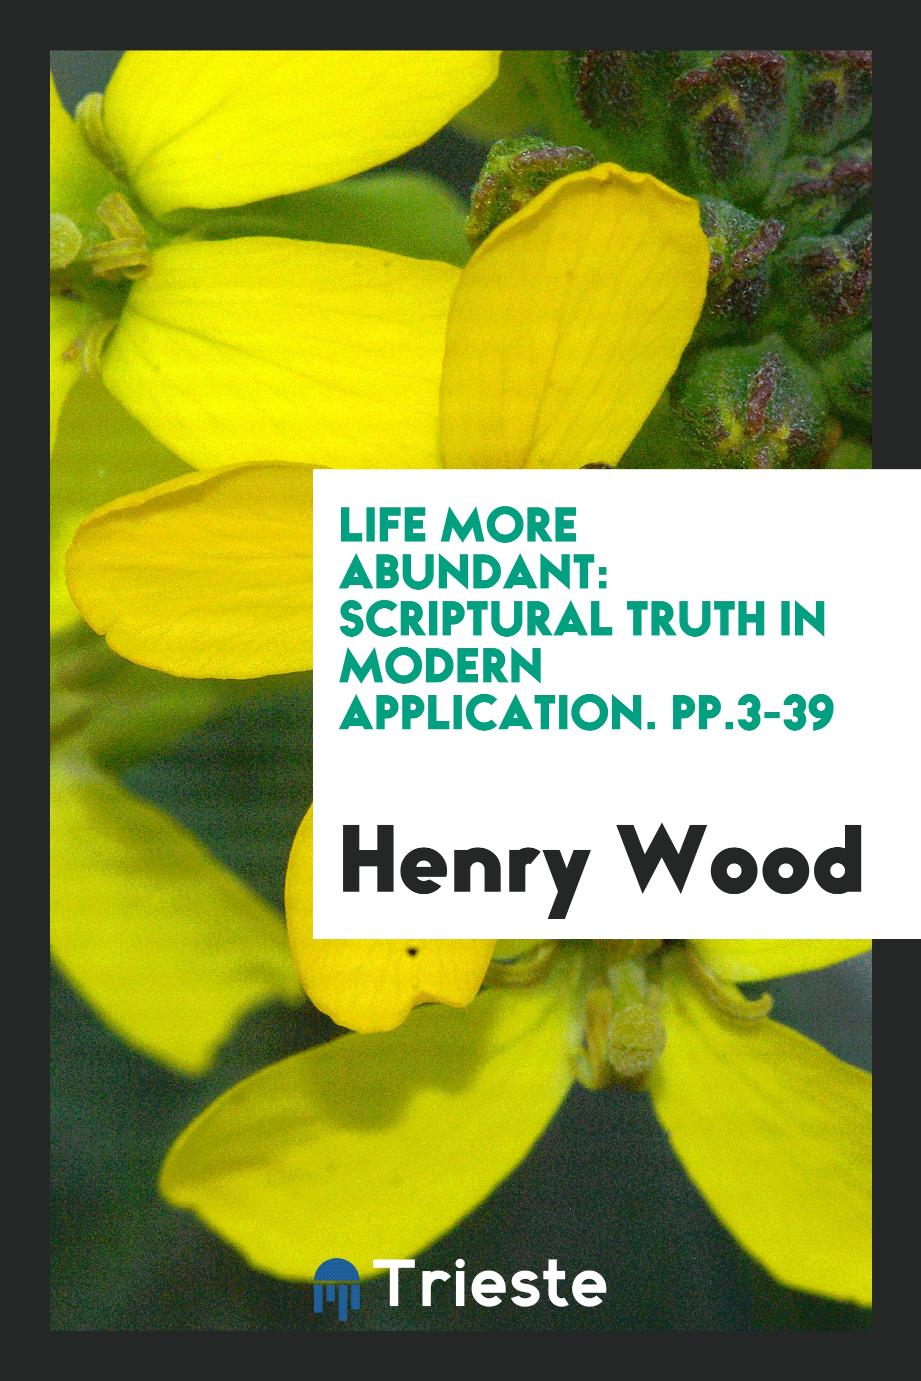 Life More Abundant: Scriptural Truth in Modern Application. pp.3-39